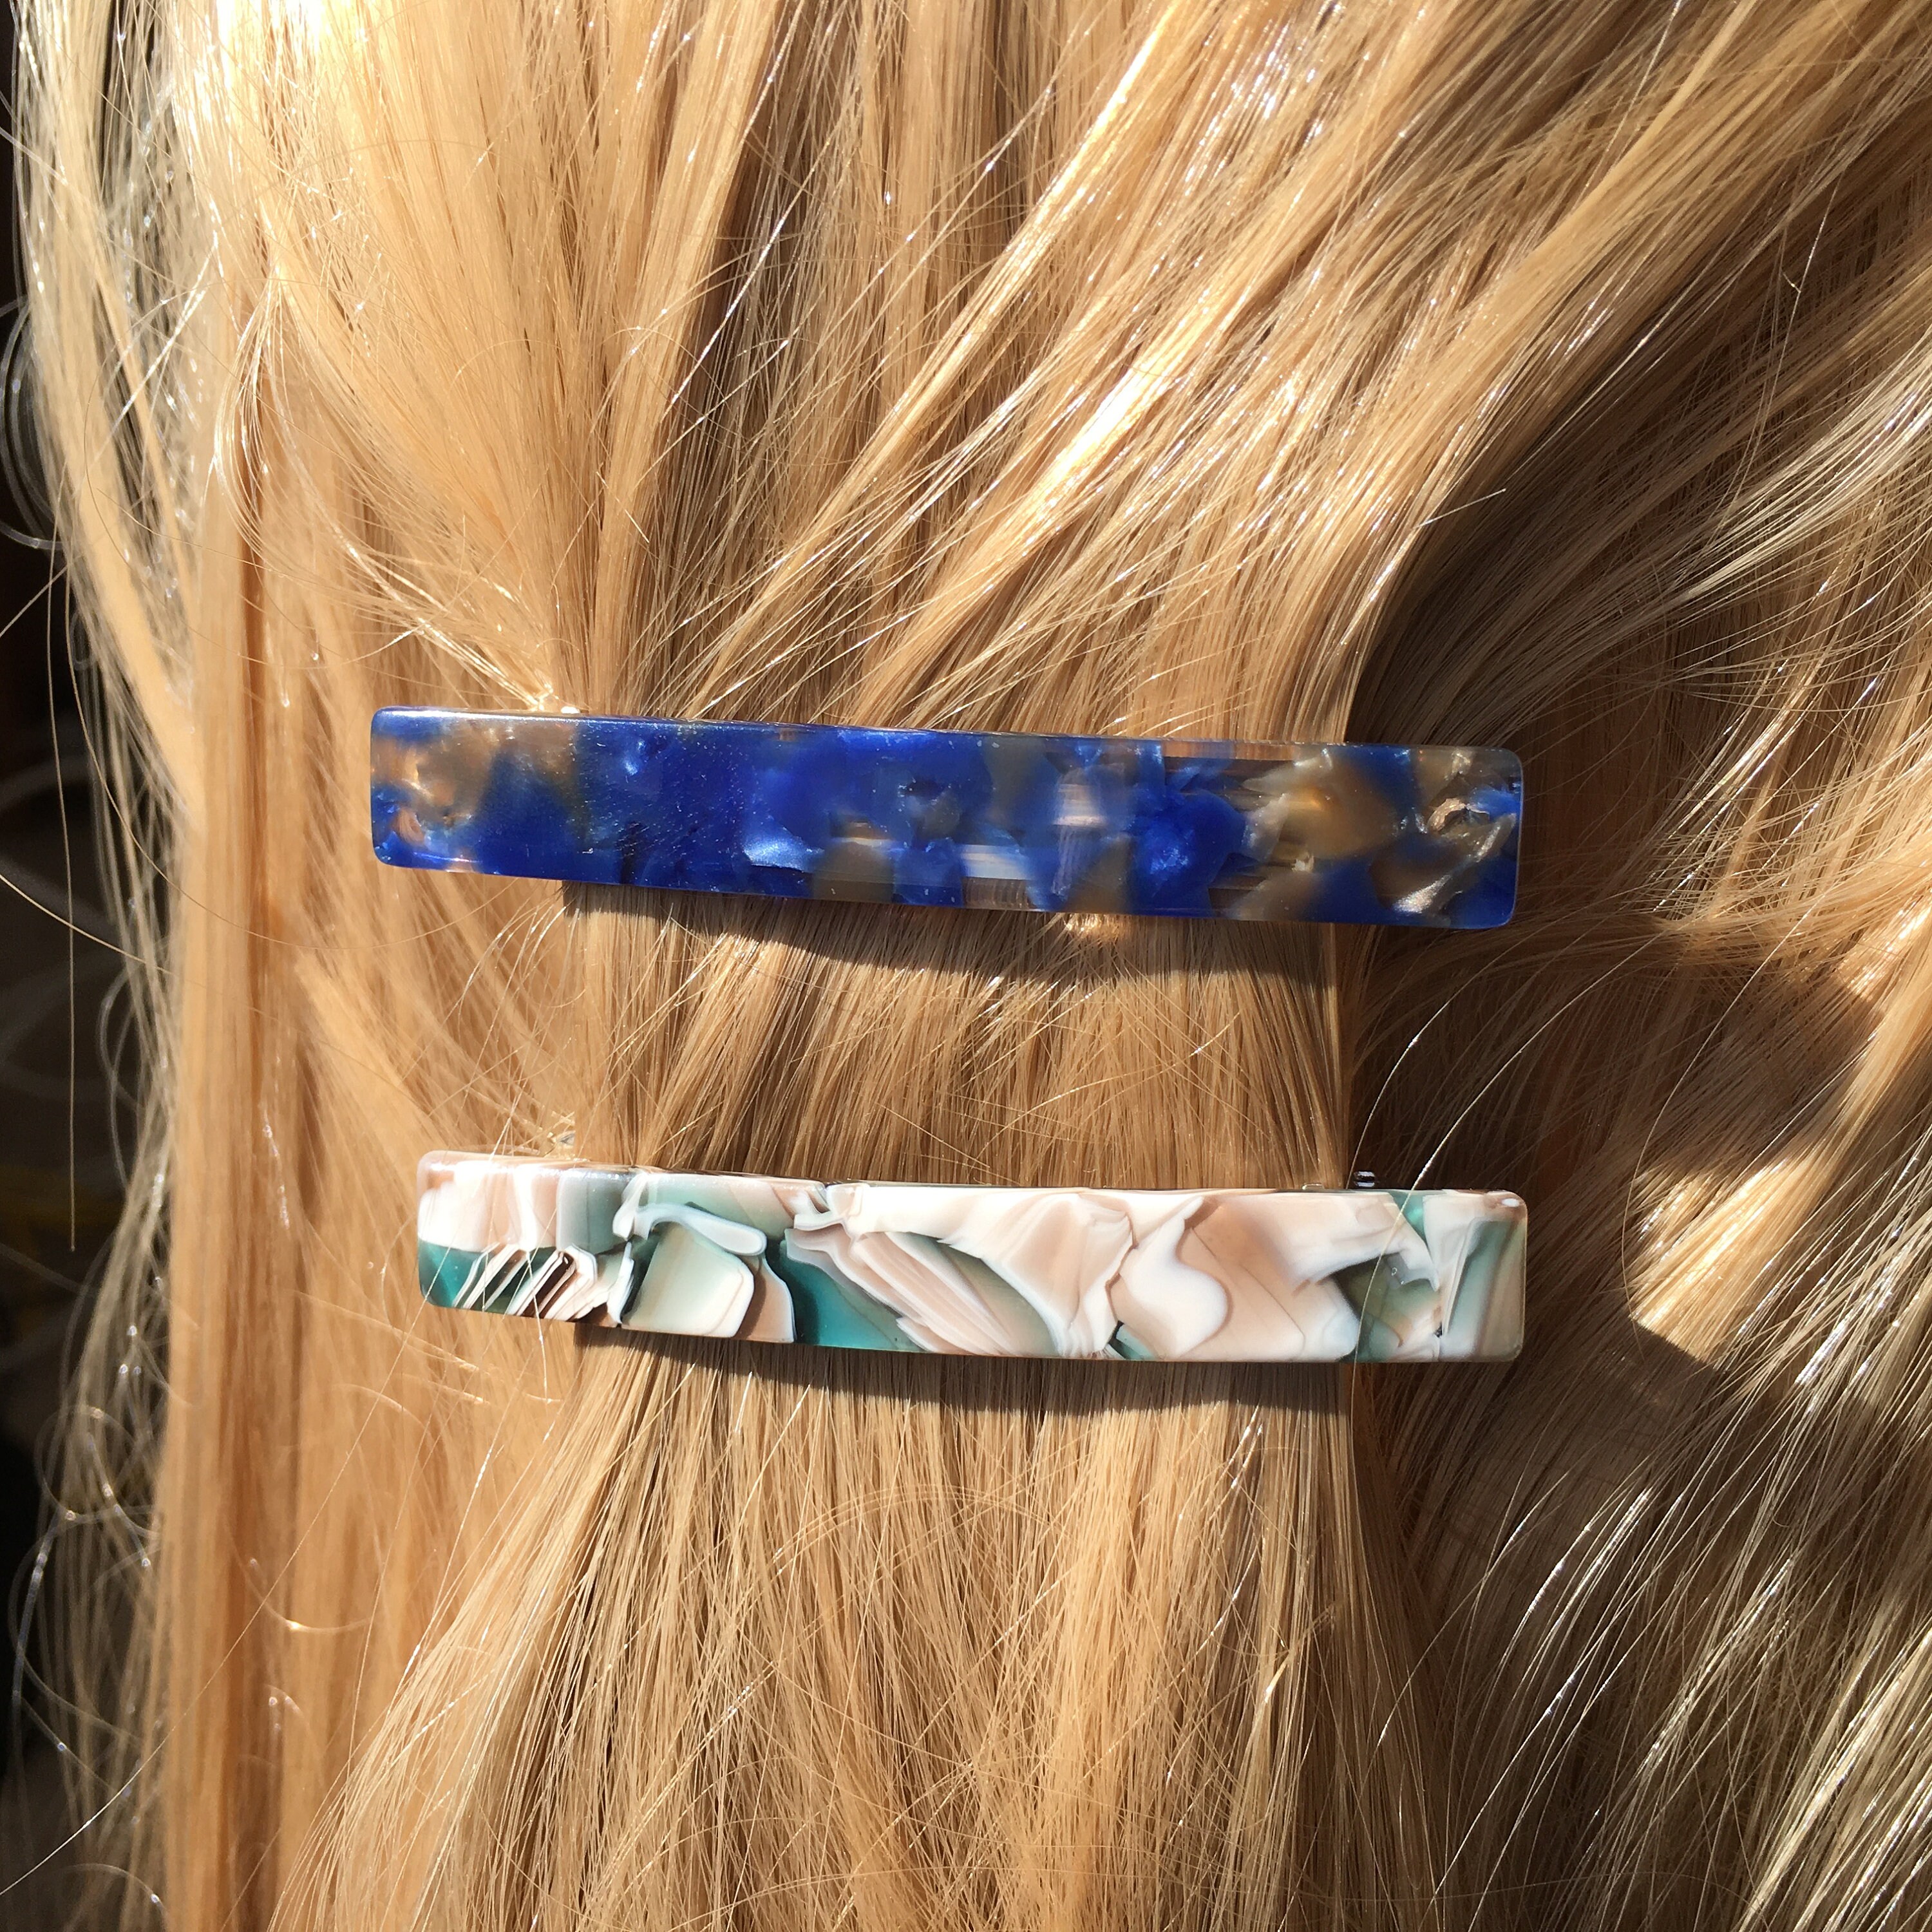 7 Pieces Women's Hair Barrettes - Rectangle Hair Clip Barrettes